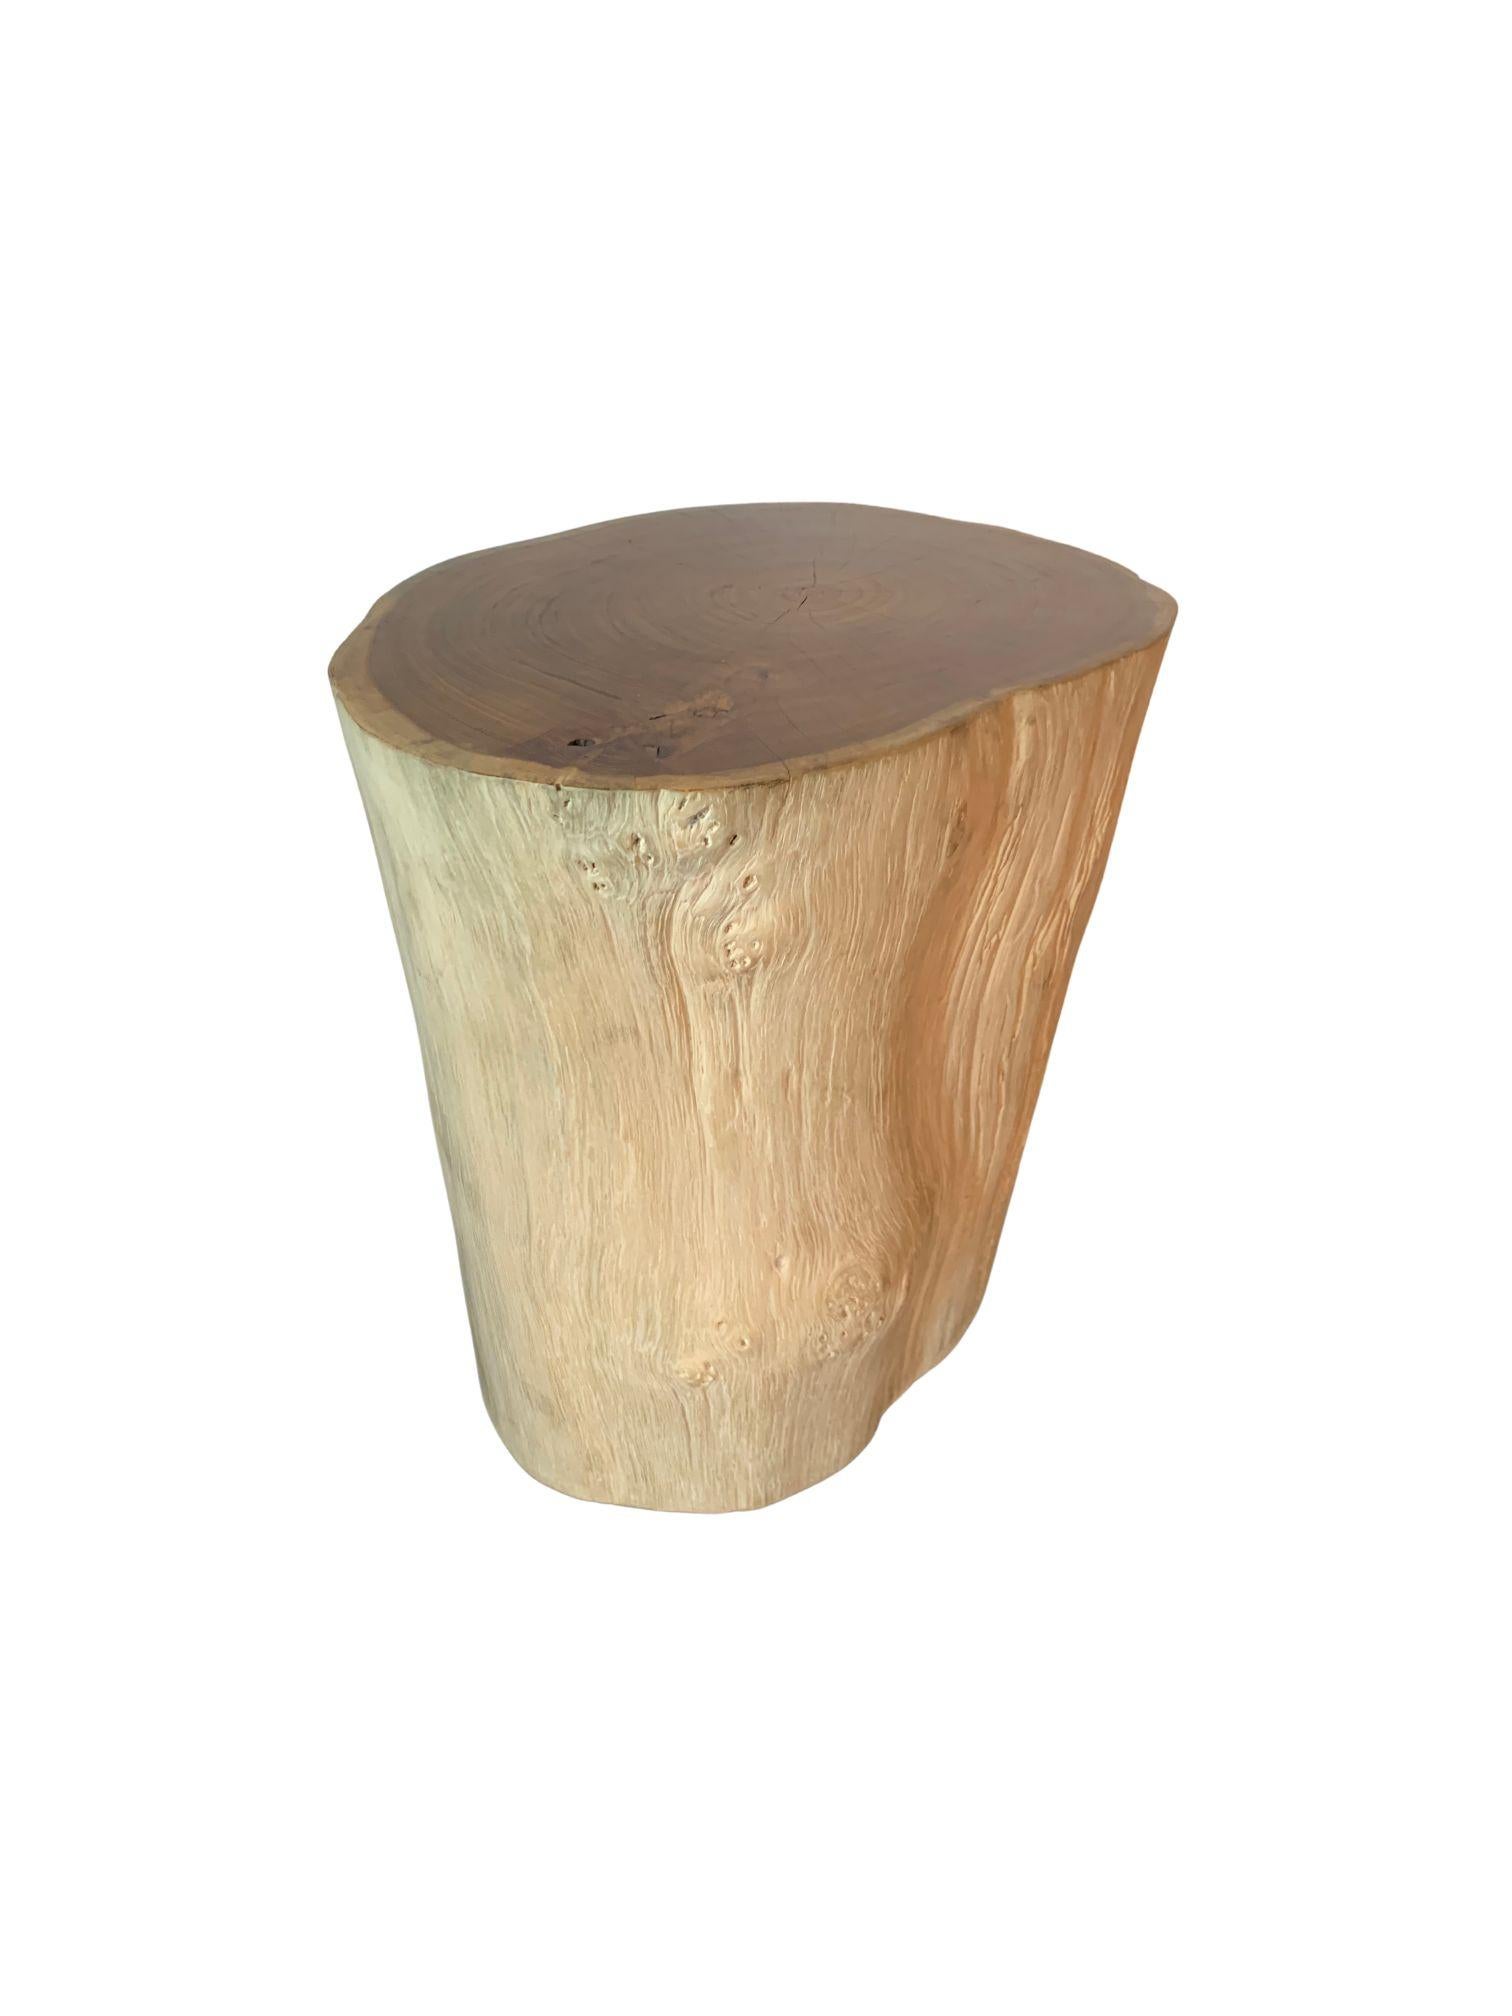 Organic Modern Tree Trunk Side Table Solid Teak Wood Bleached Finish Modern Organic For Sale